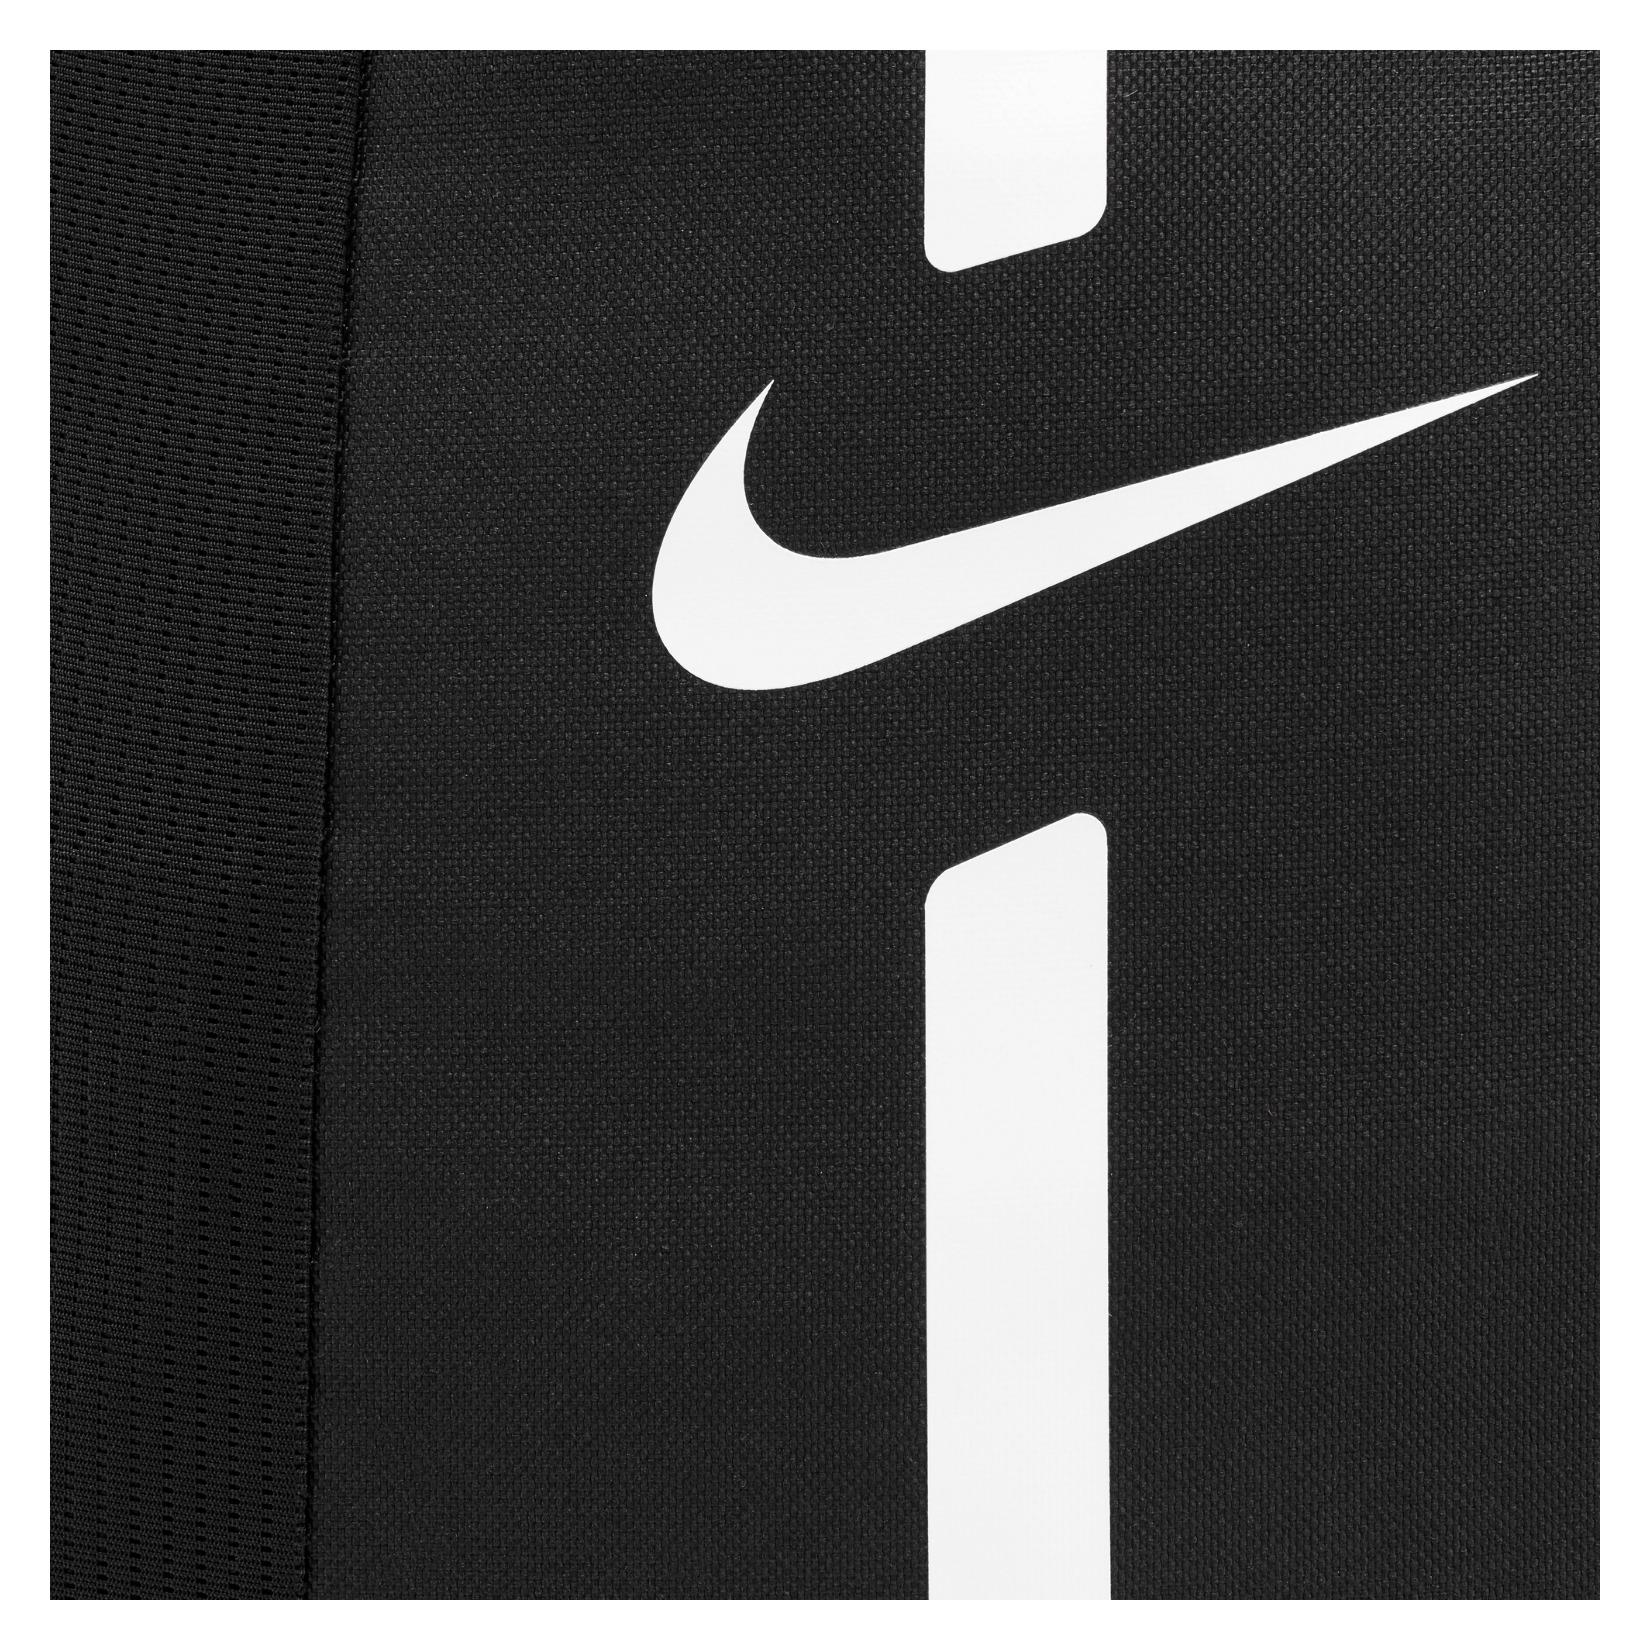 Nike Academy Team Backpack - Kitlocker.com